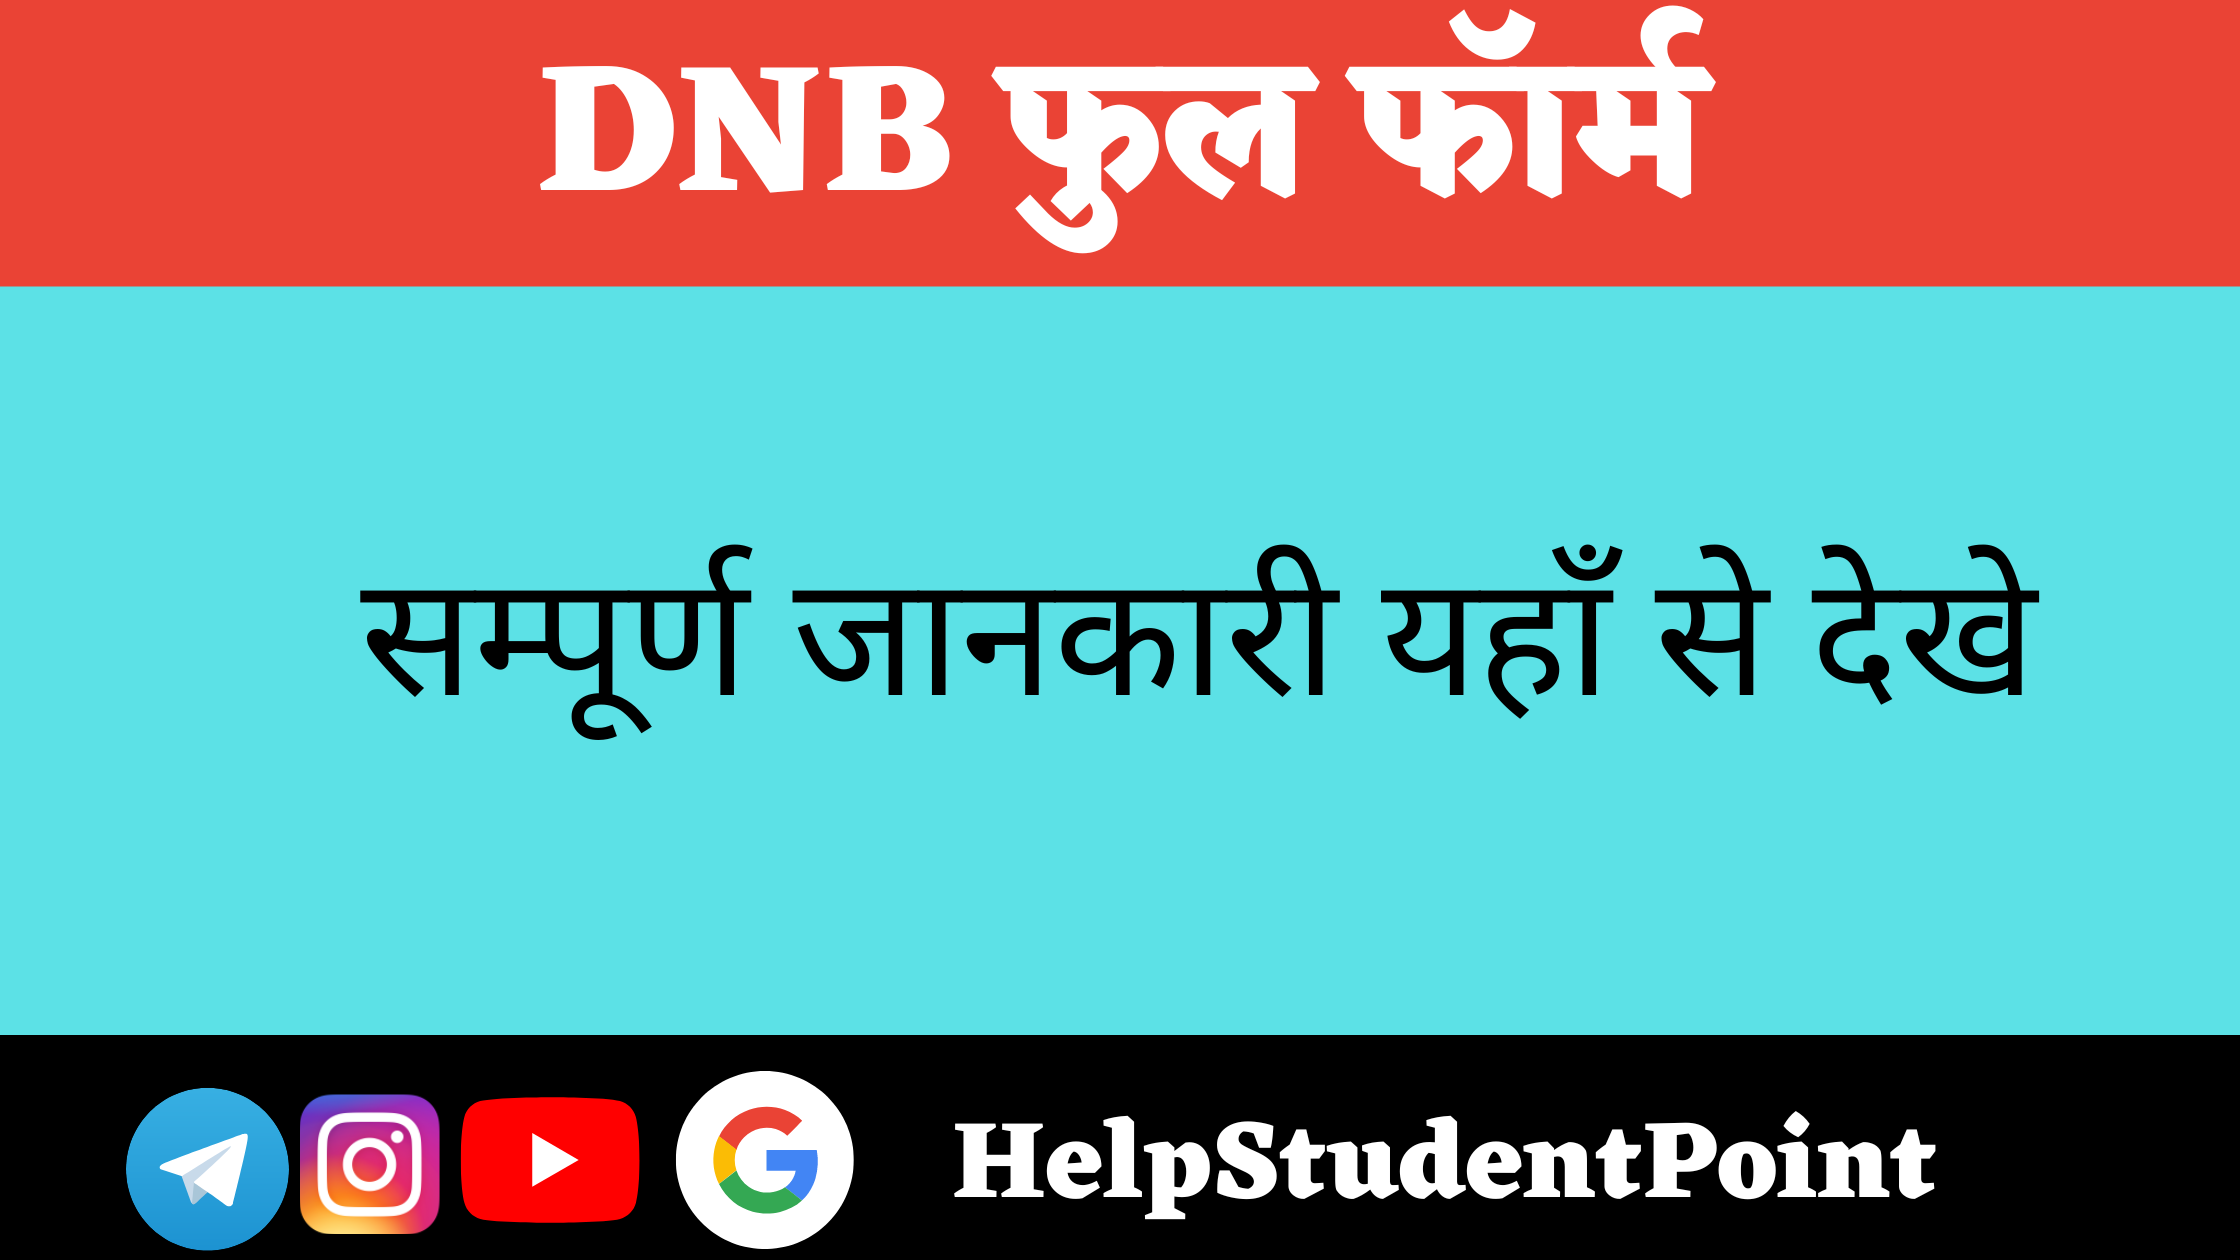 DNB Full form In Hindi